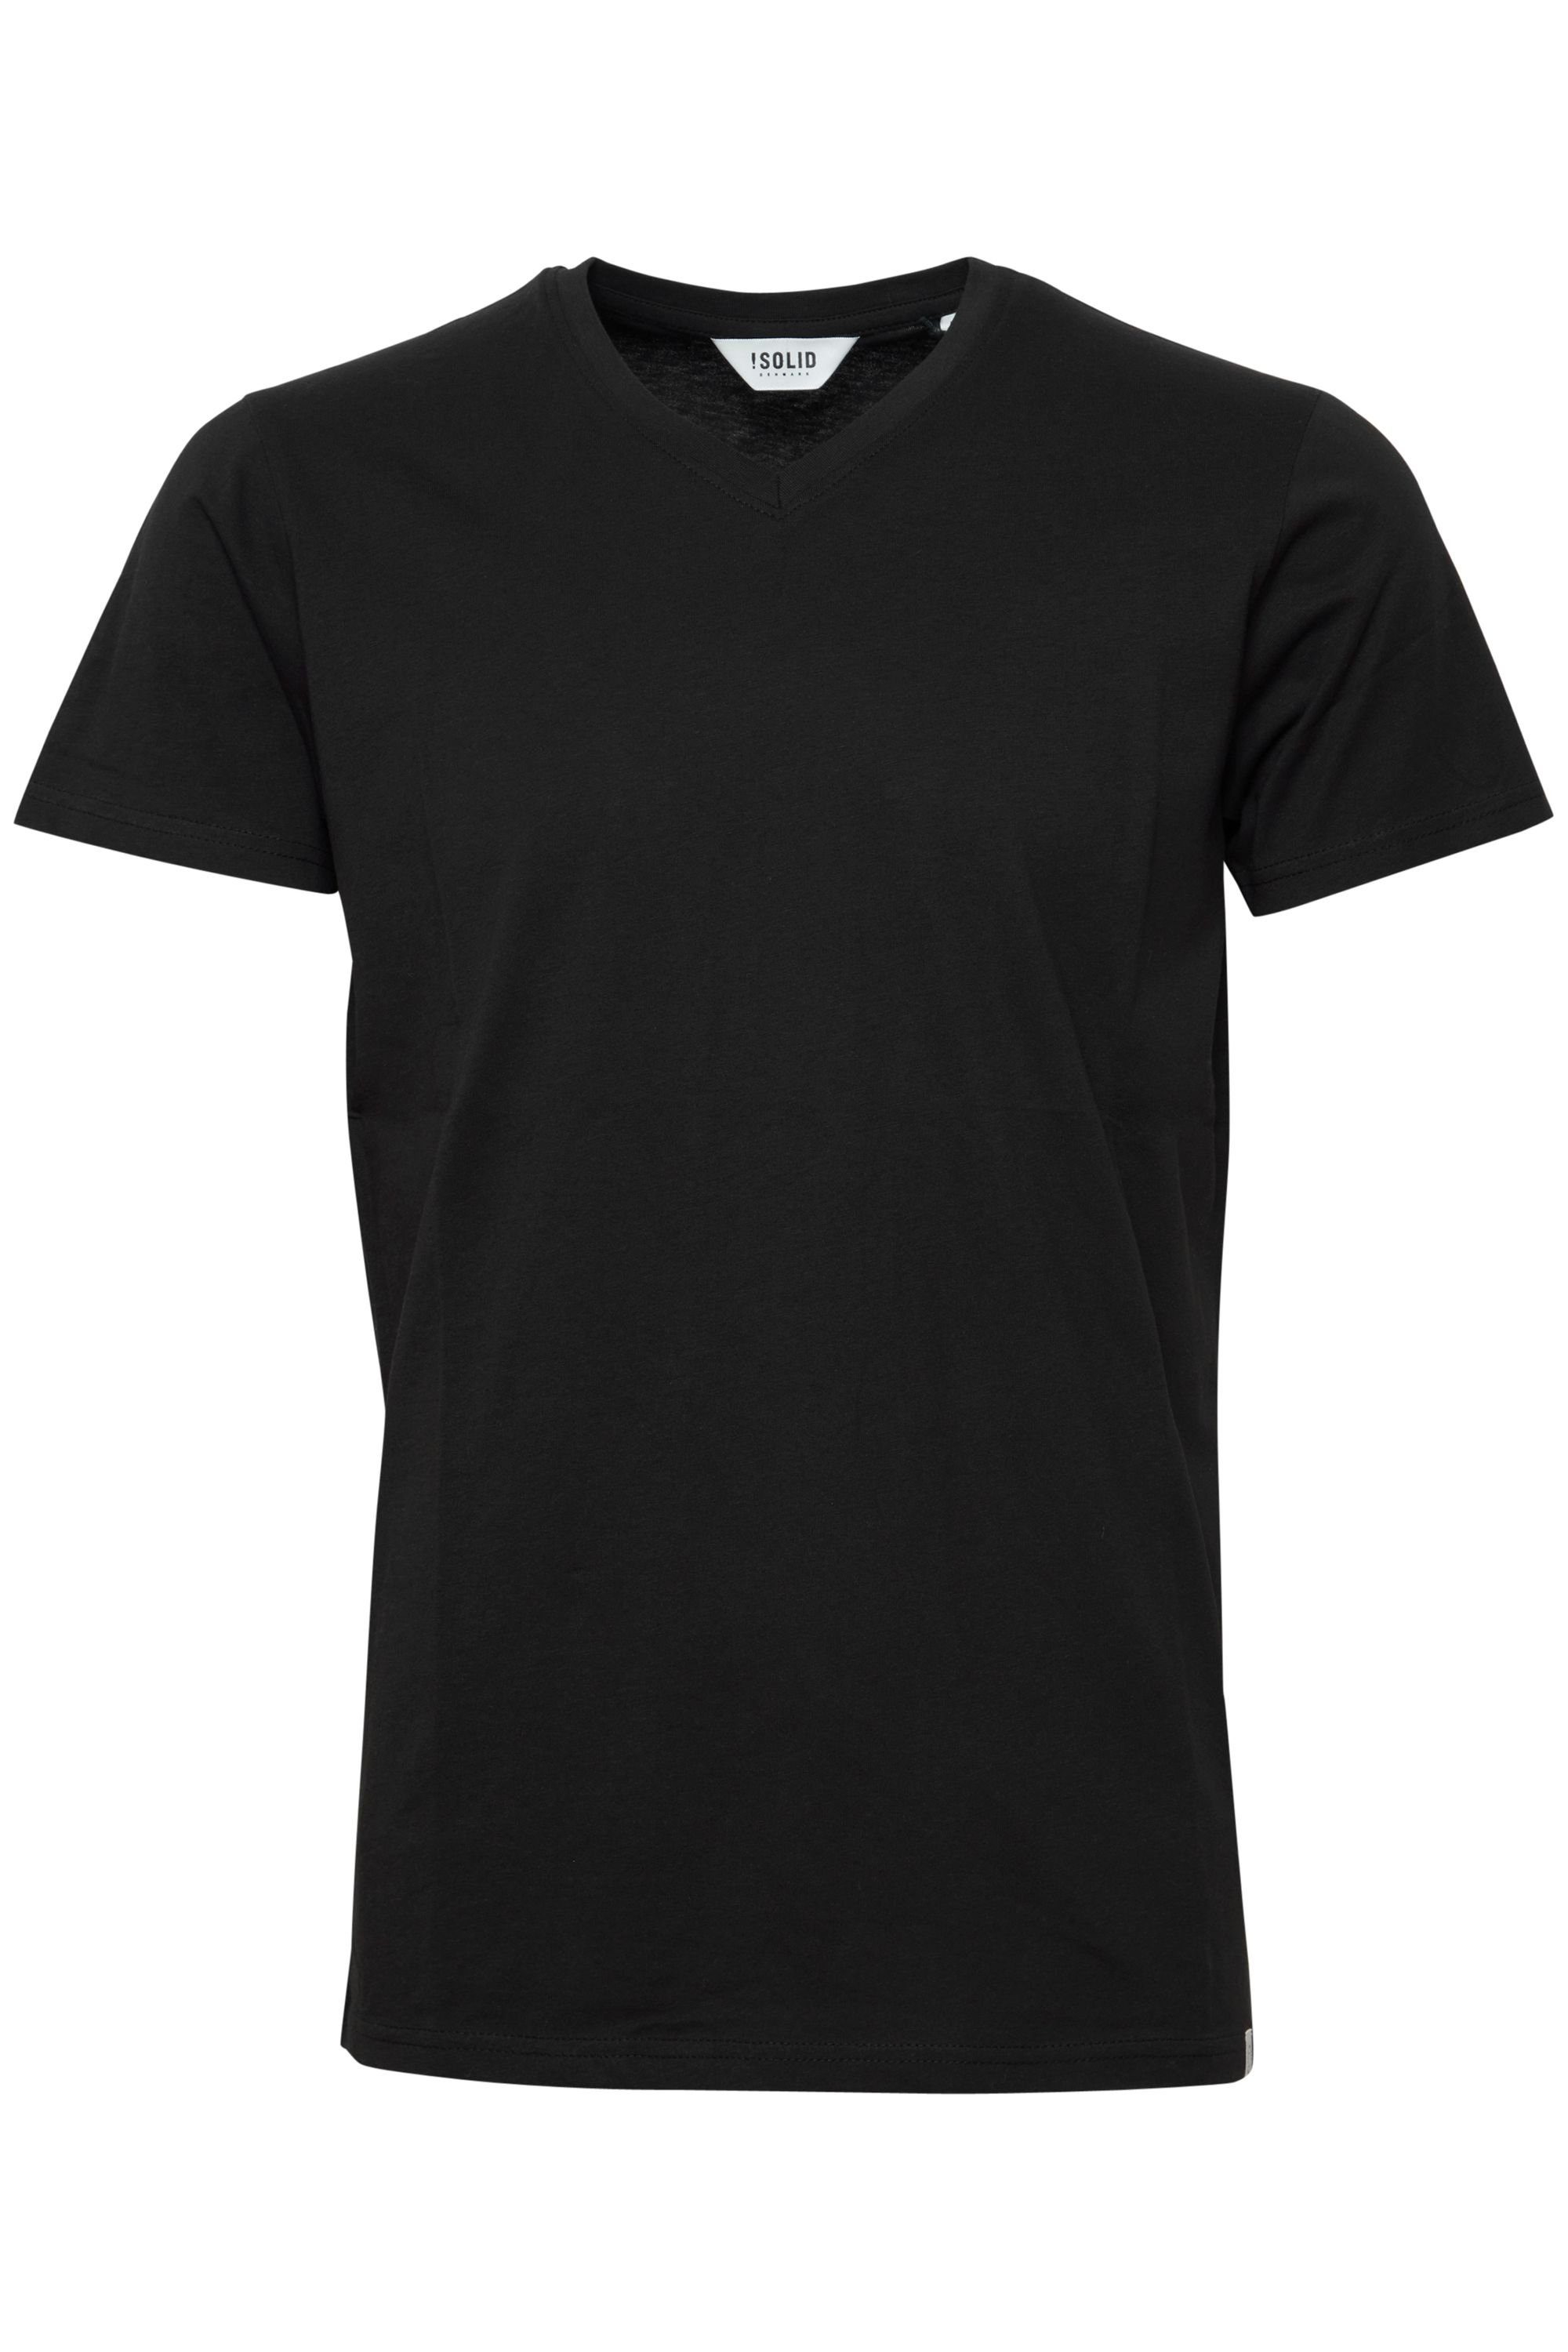 !Solid V-Shirt SDBedo Kurzarmshirt mit Melange Effekt